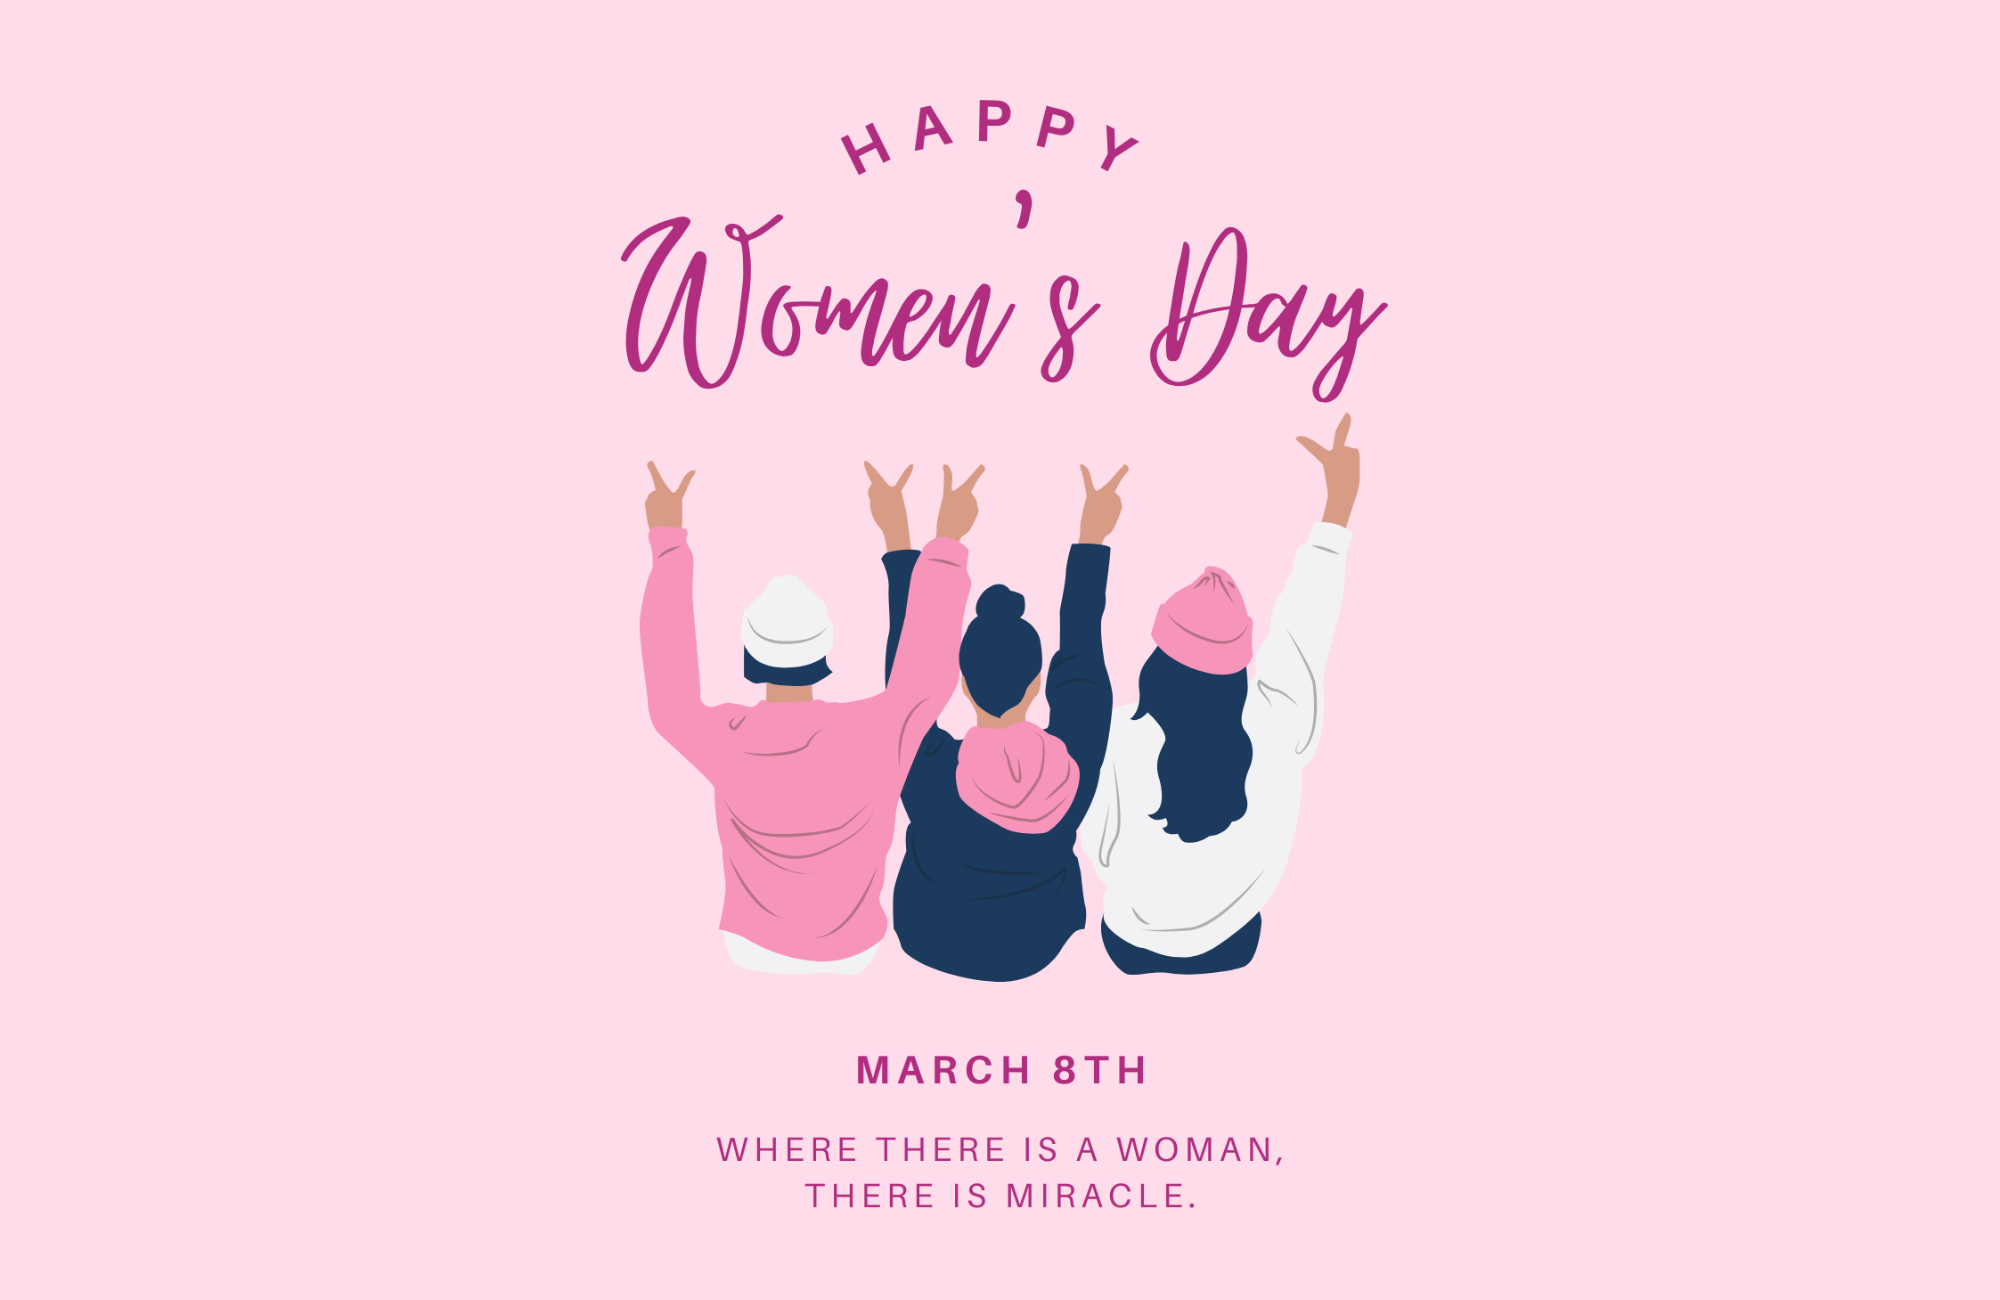 Homdiy News-Happy Women's Day And more!